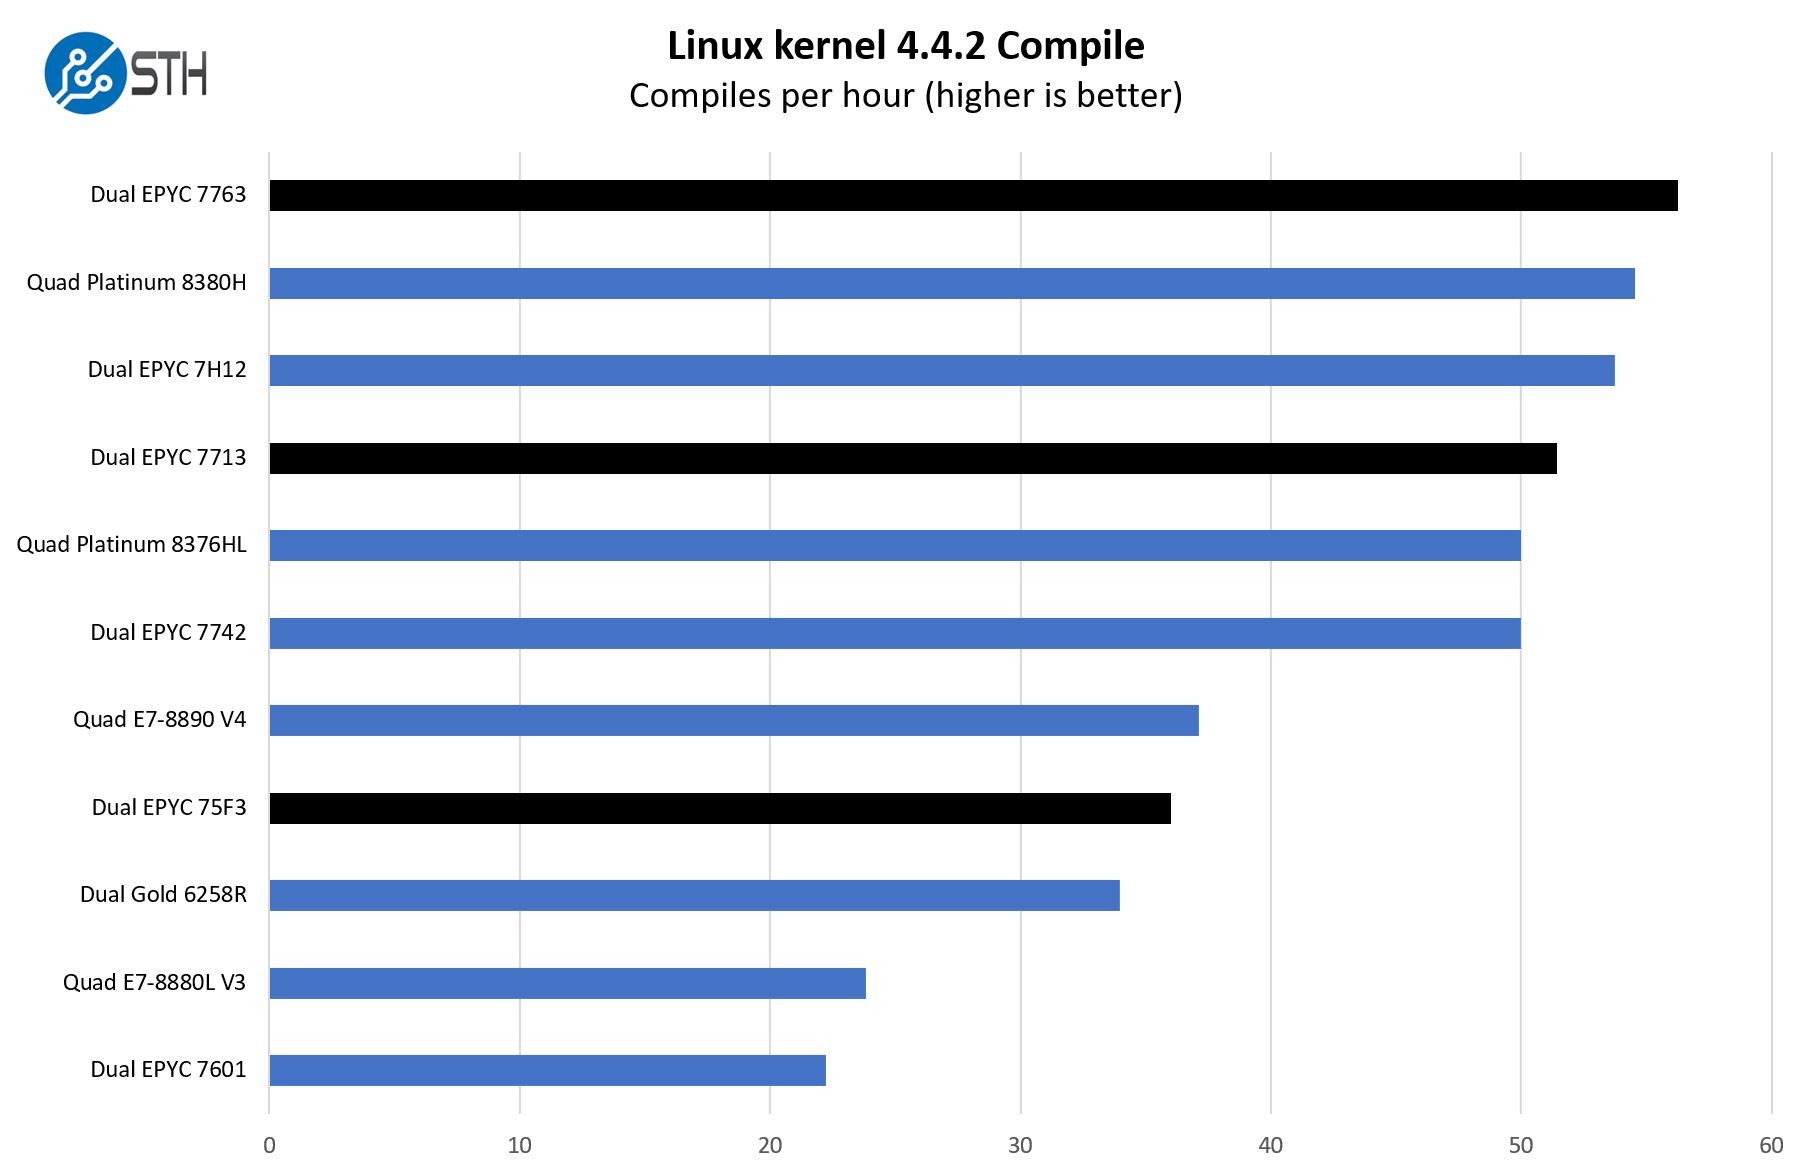 AMD EPYC 7003 High End Linux Kernel Compile Performance